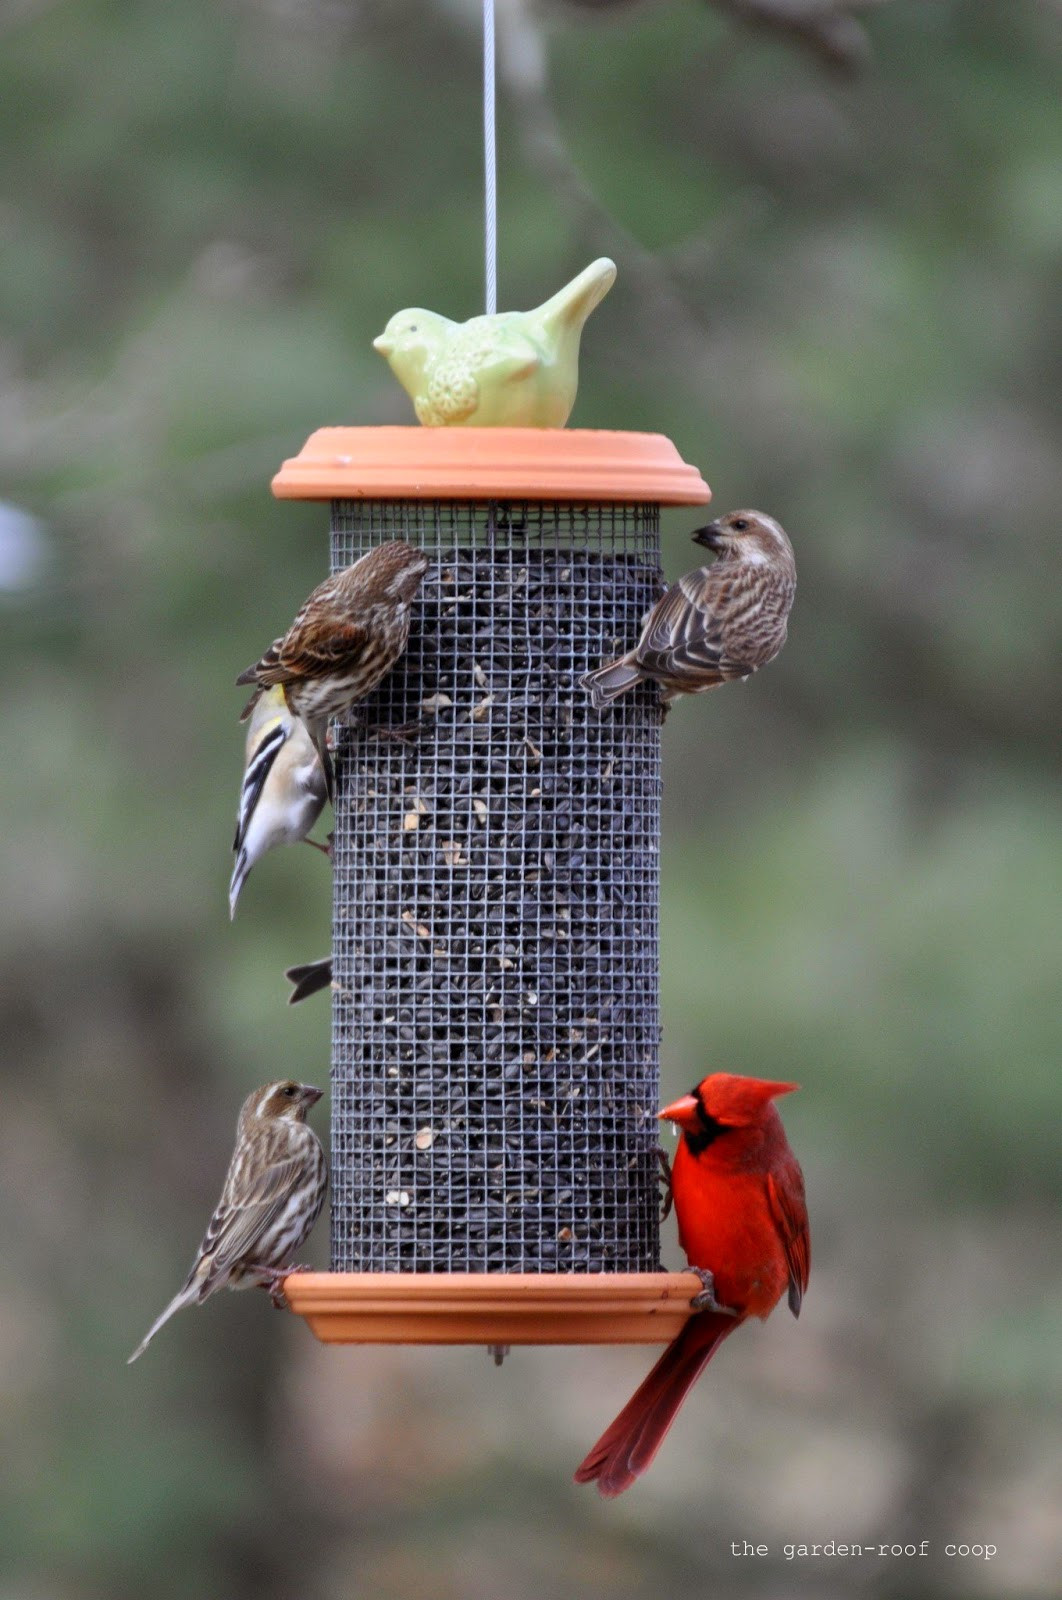 Best ideas about DIY Bird Feeders
. Save or Pin the garden roof coop DIY Sunflower Tower Bird Feeder Now.